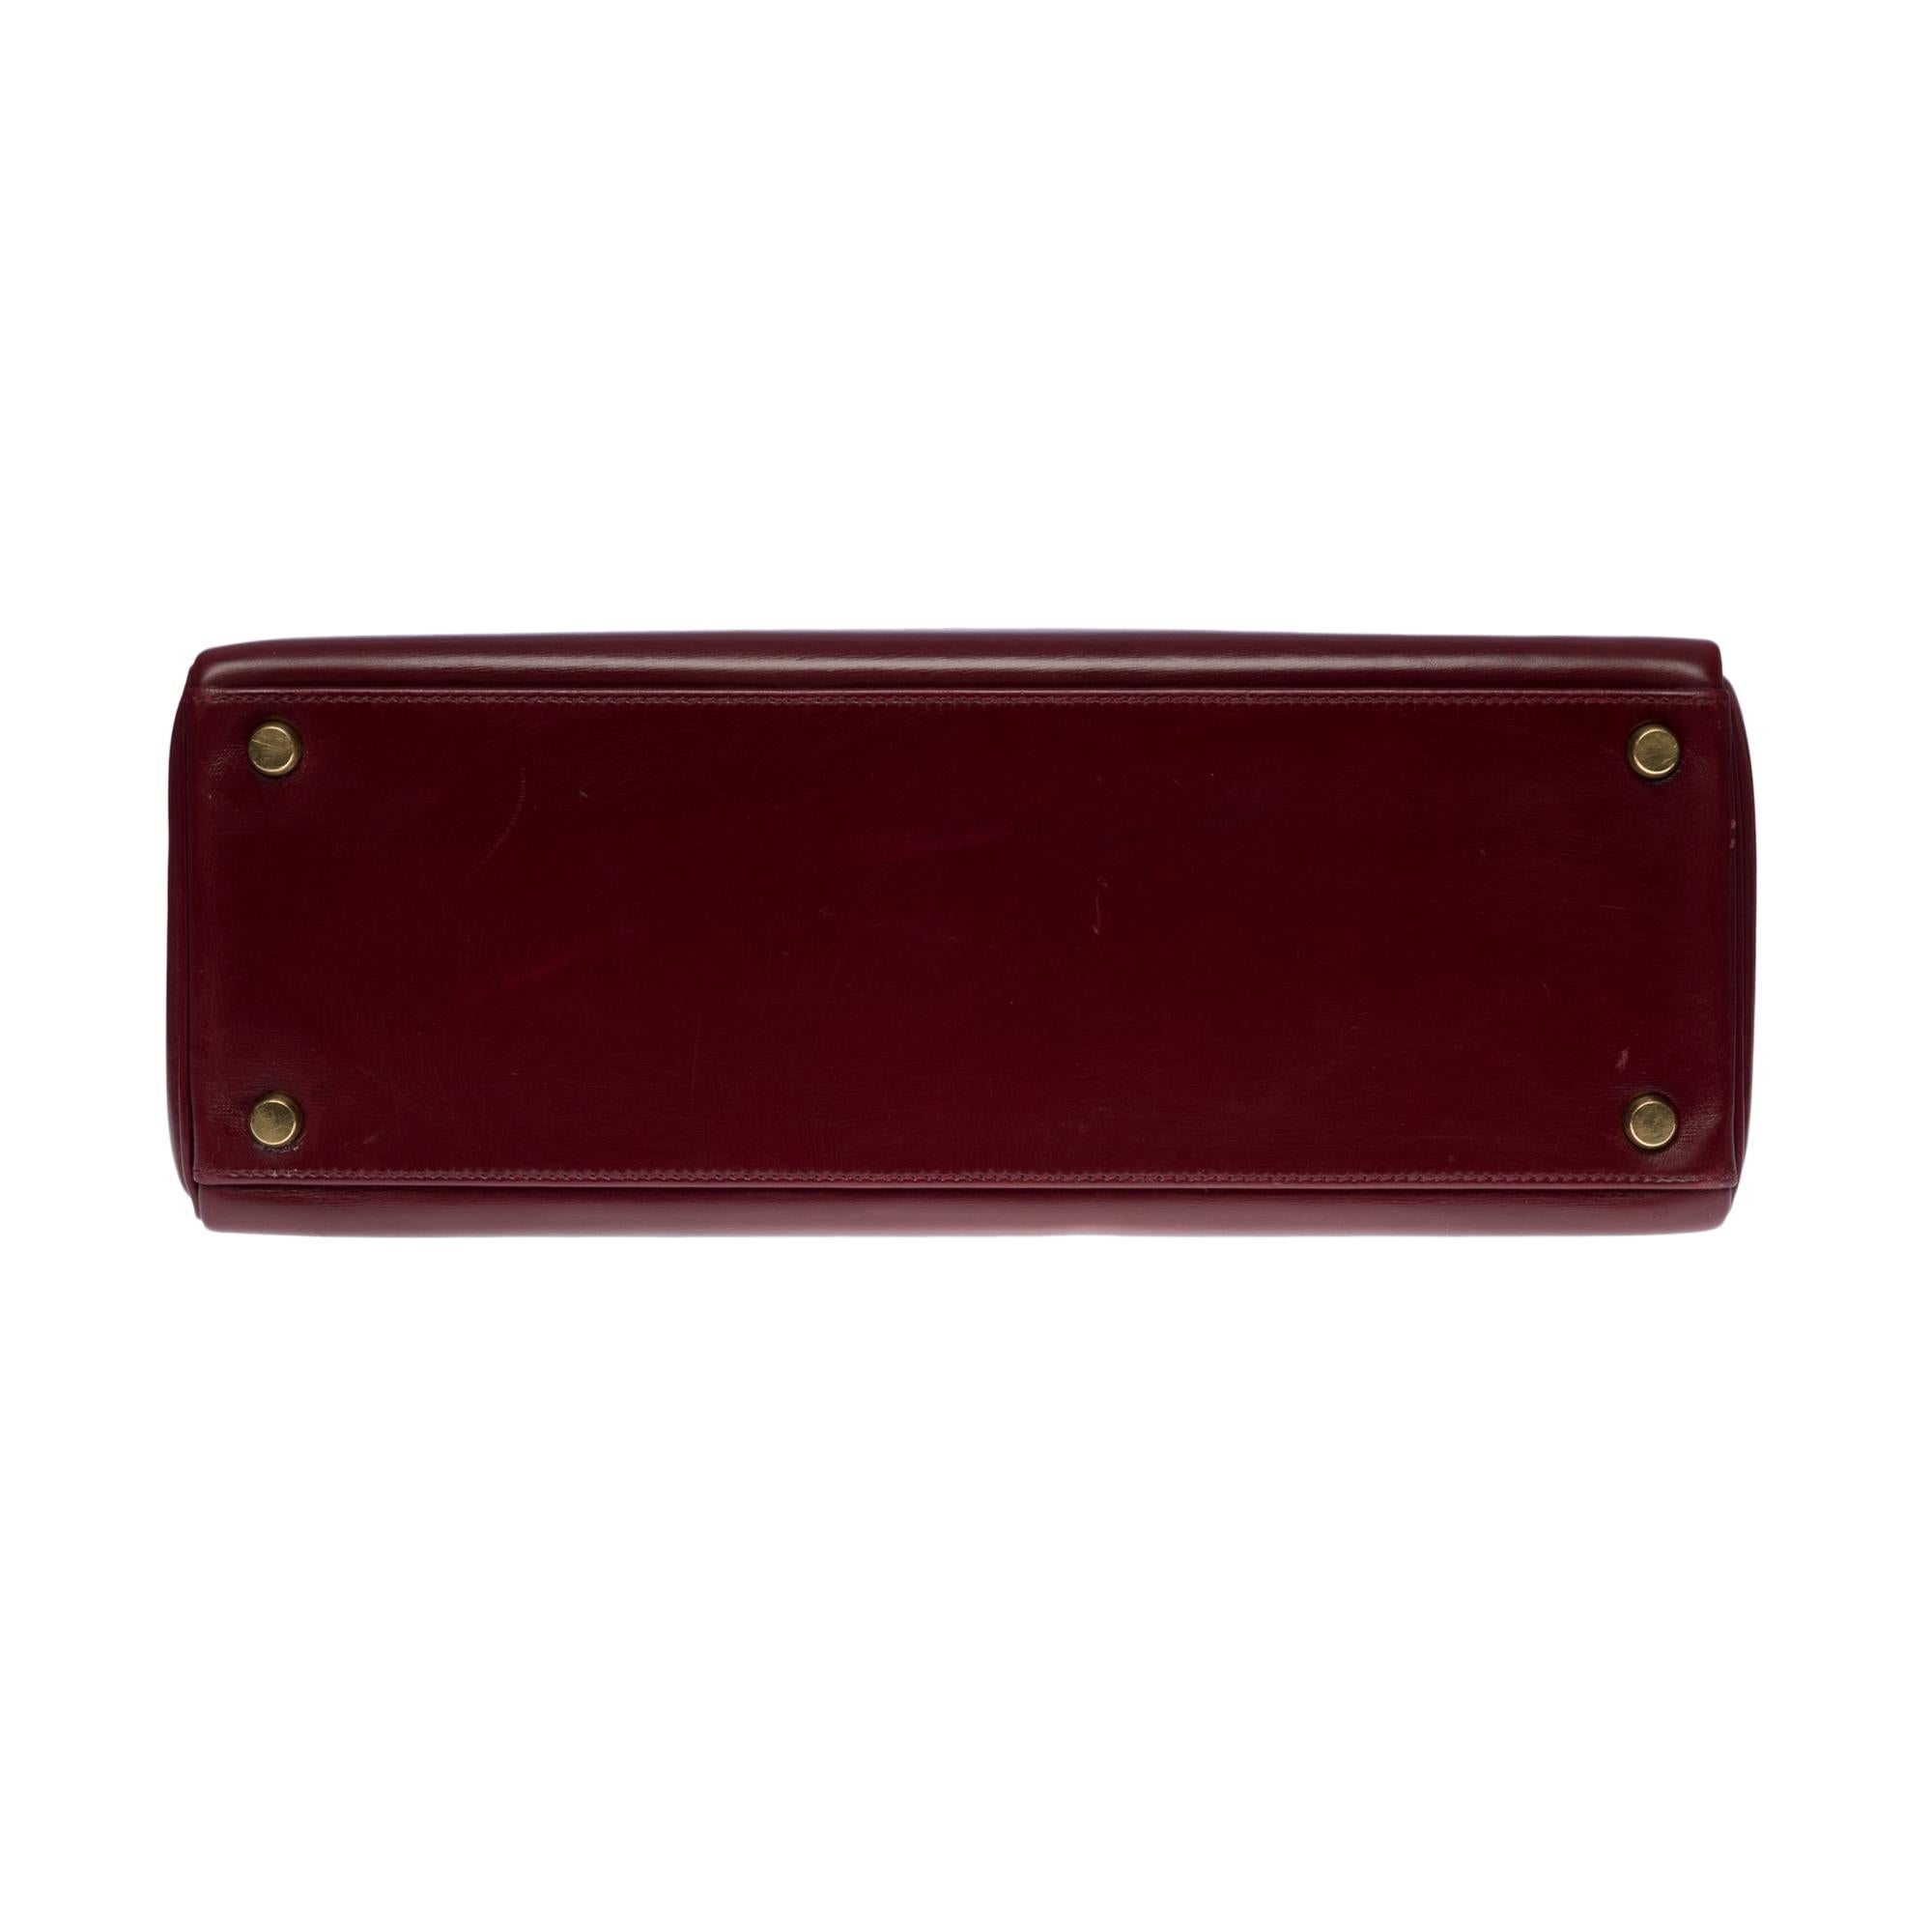 Gorgeous Hermès Kelly 32 retourne handbag strap in Burgundy Calf box leather, GHW 1